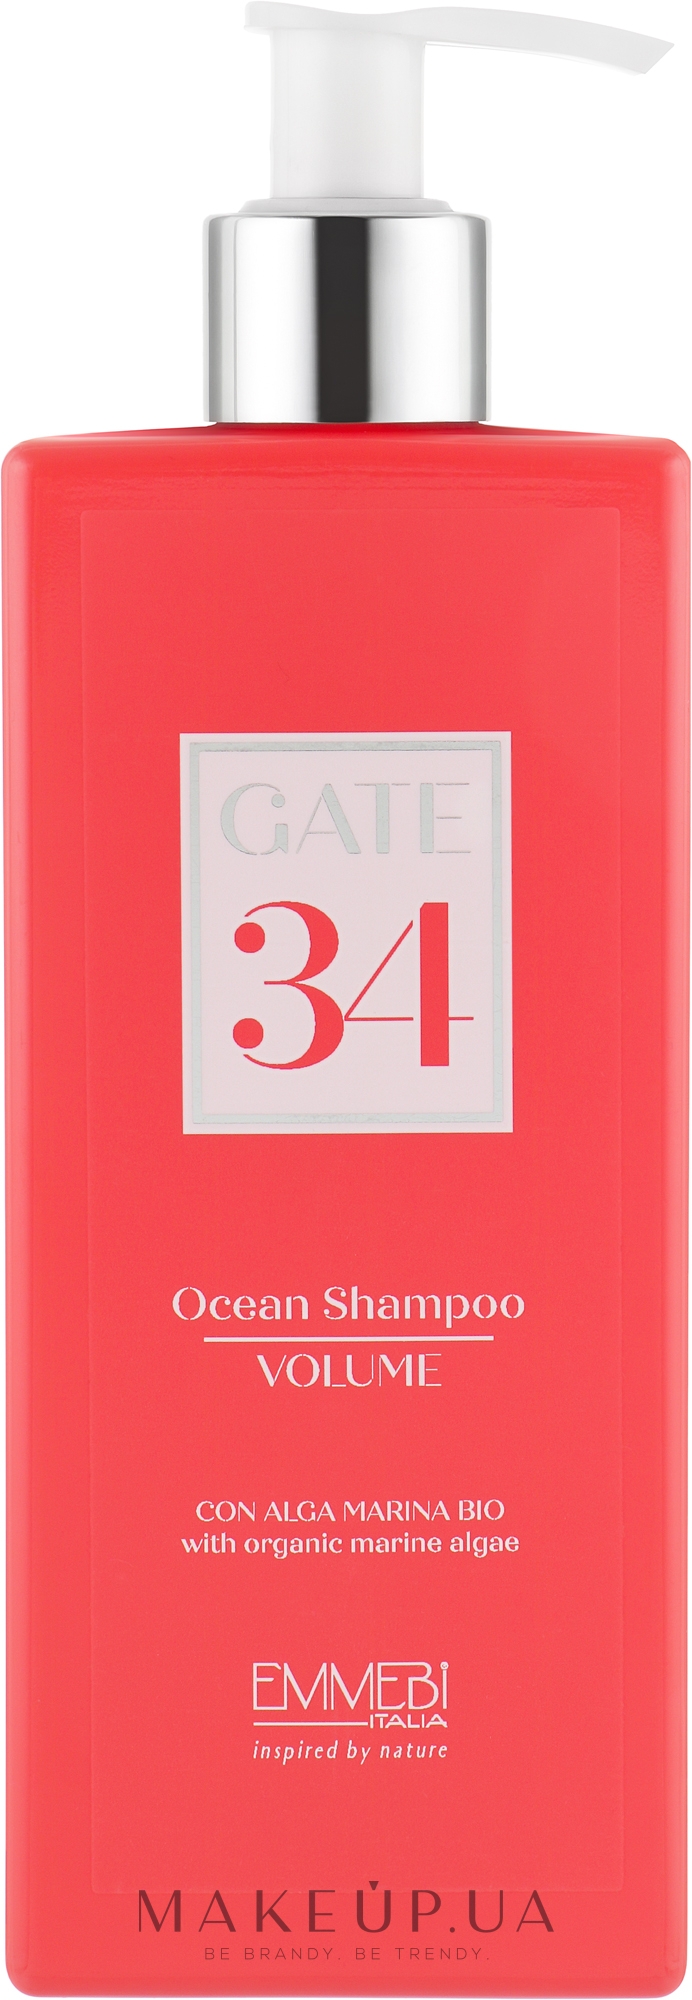 Шампунь для объема волос - Emmebi Italia Gate 34 Wash Ocean Shampoo Volume — фото 250ml